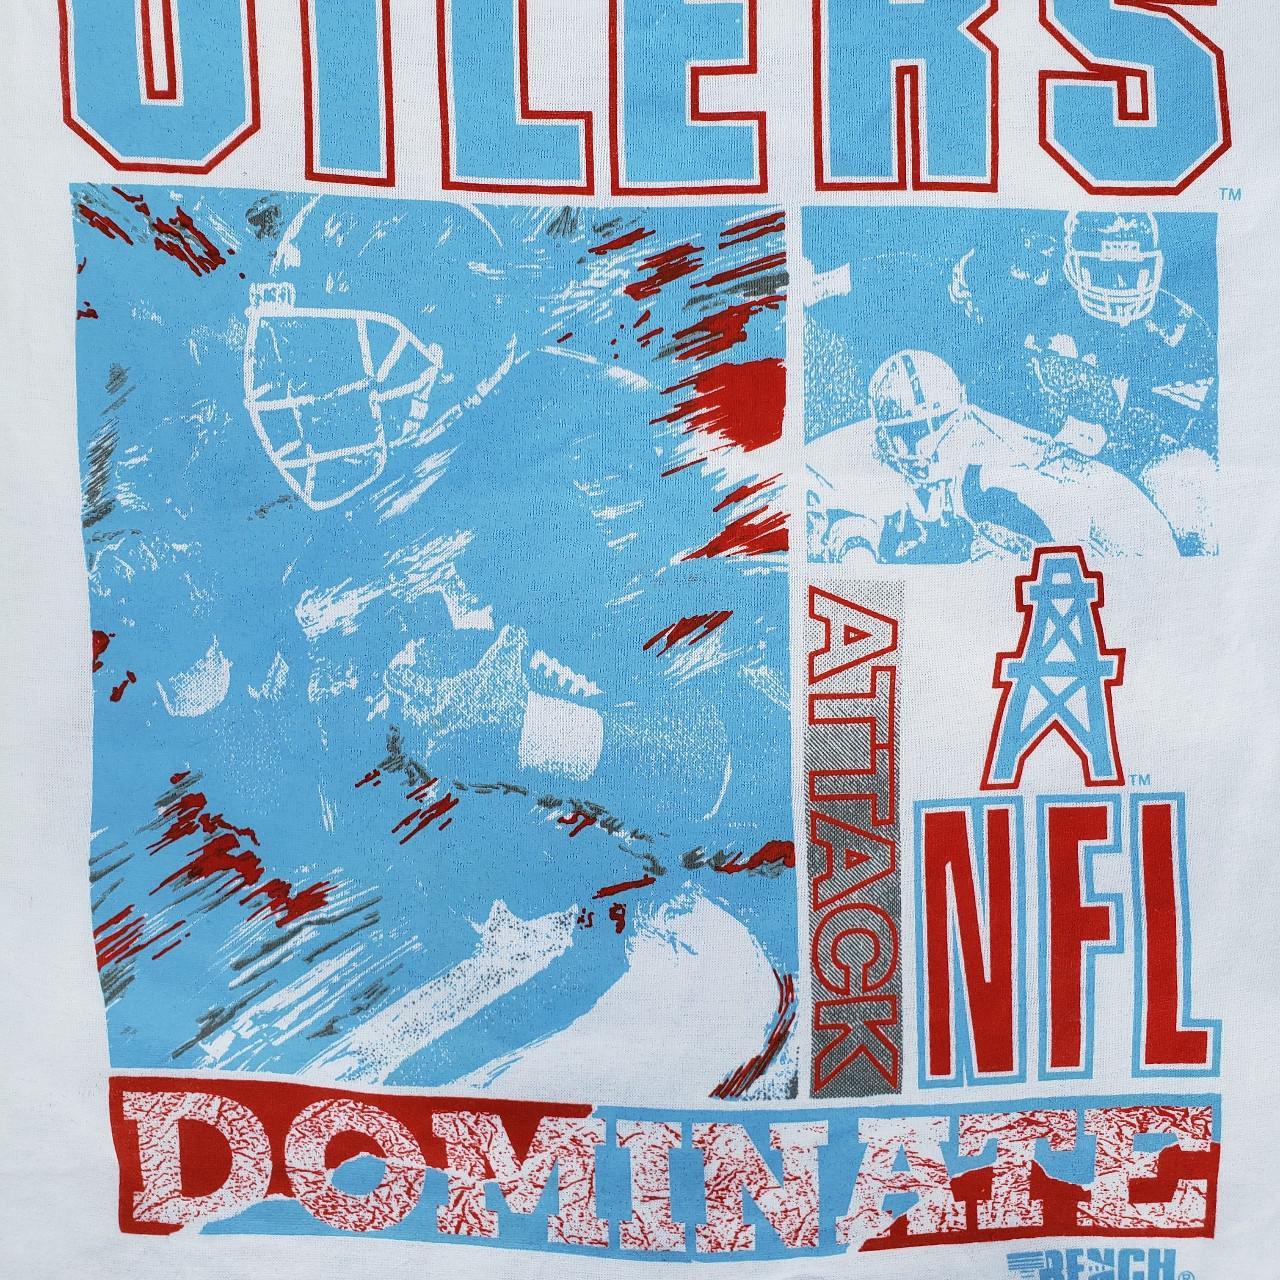 Logo 7 Houston Oilers T shirt Size XL 1992 90s. - Depop